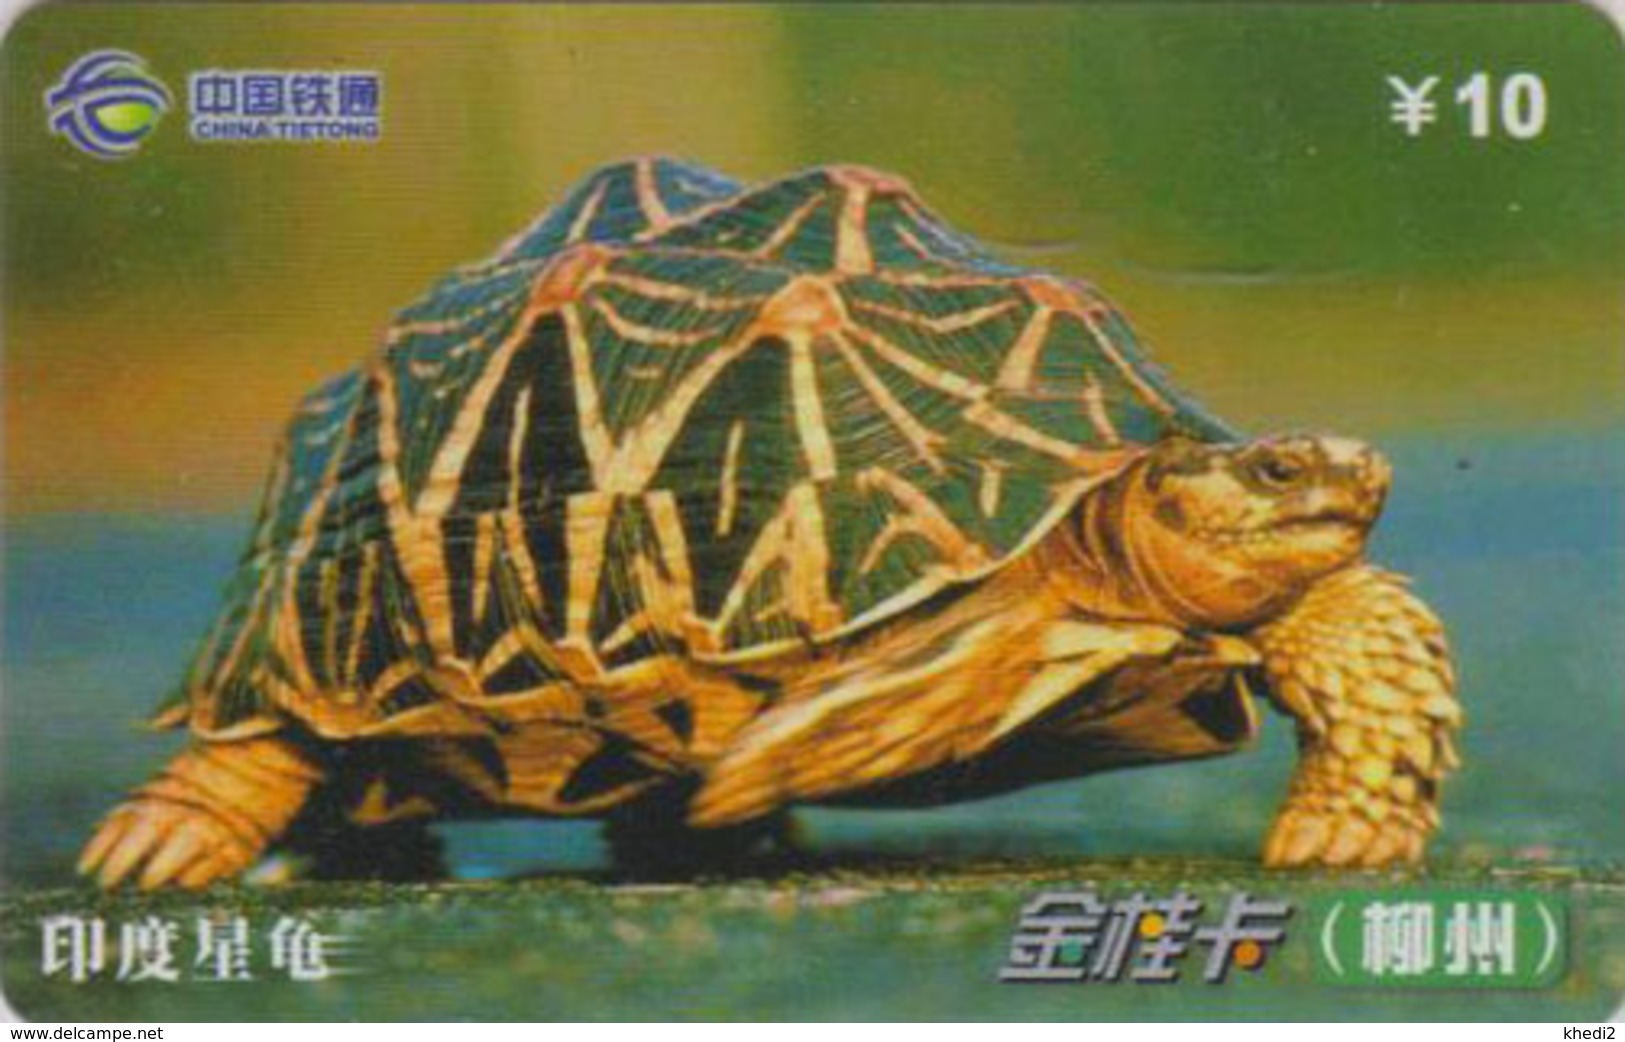 Télécarte Chine Tietong - Animal - TORTUE - TURTLE Phonecard - SCHILDKRÖTE Telefonkarte - 111 - Tortugas